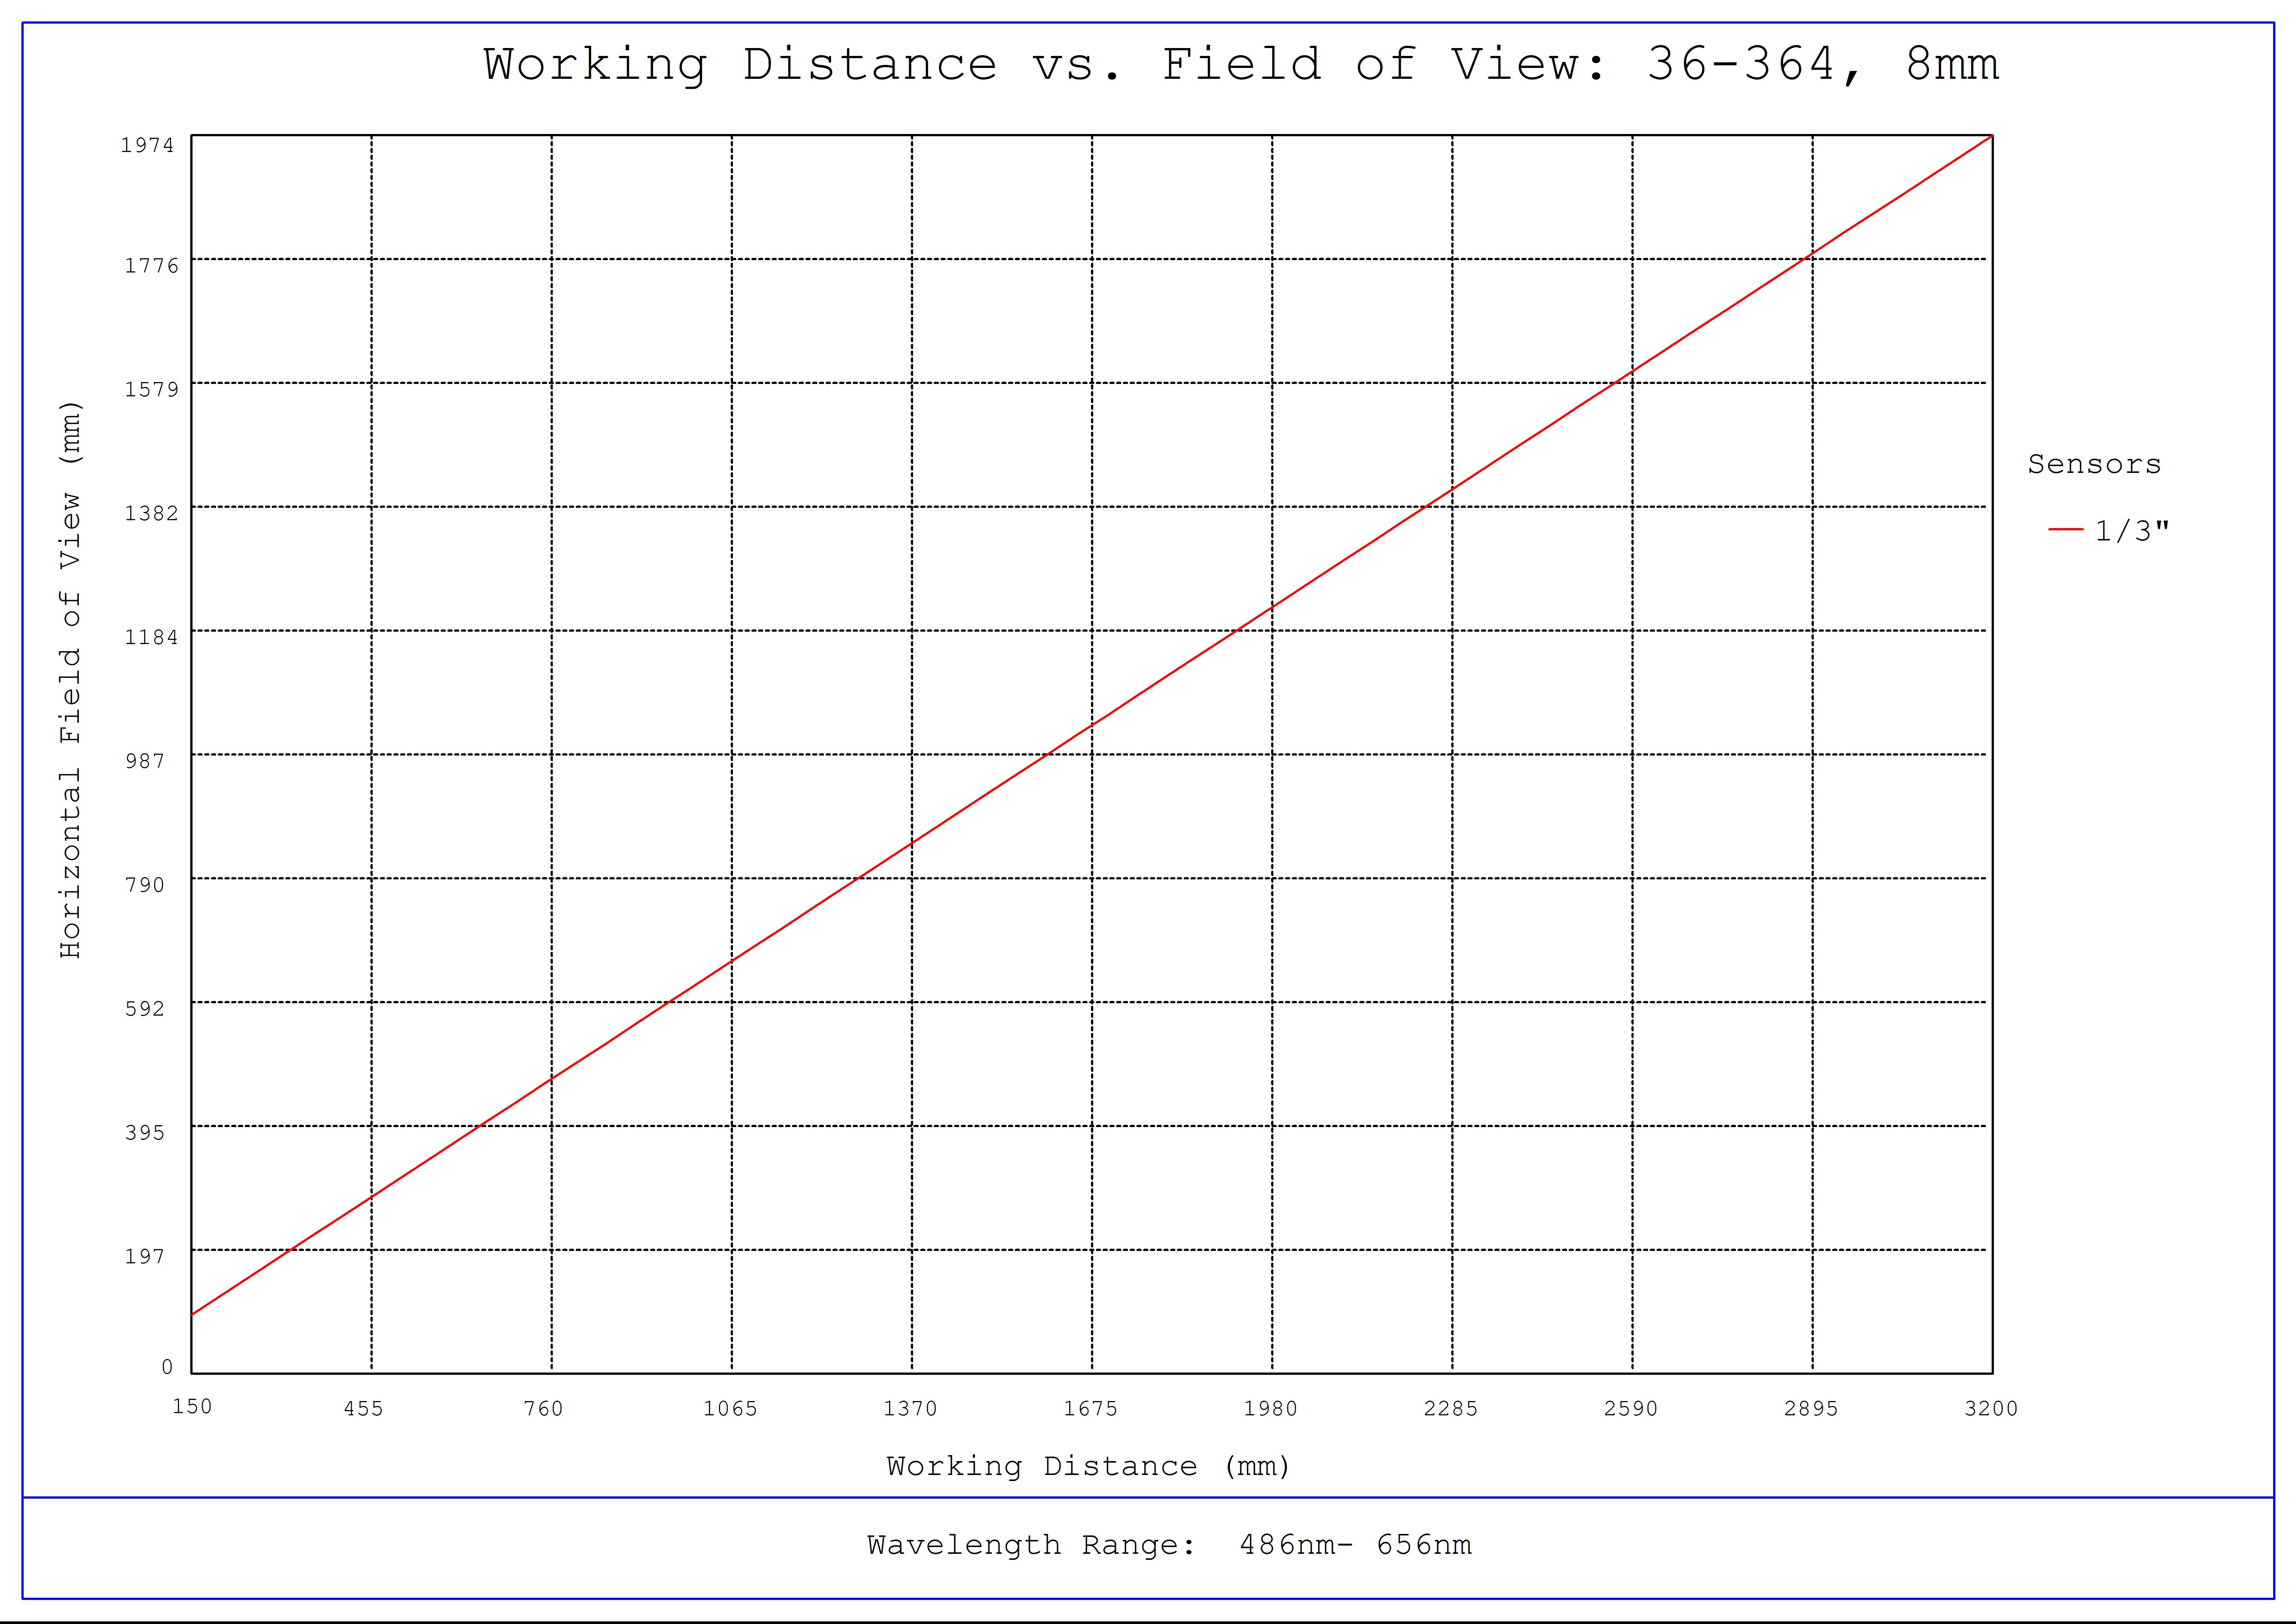 #36-364, 8.0mm FL f/2.5, Rugged Blue Series M12 Lens, Working Distance versus Field of View Plot